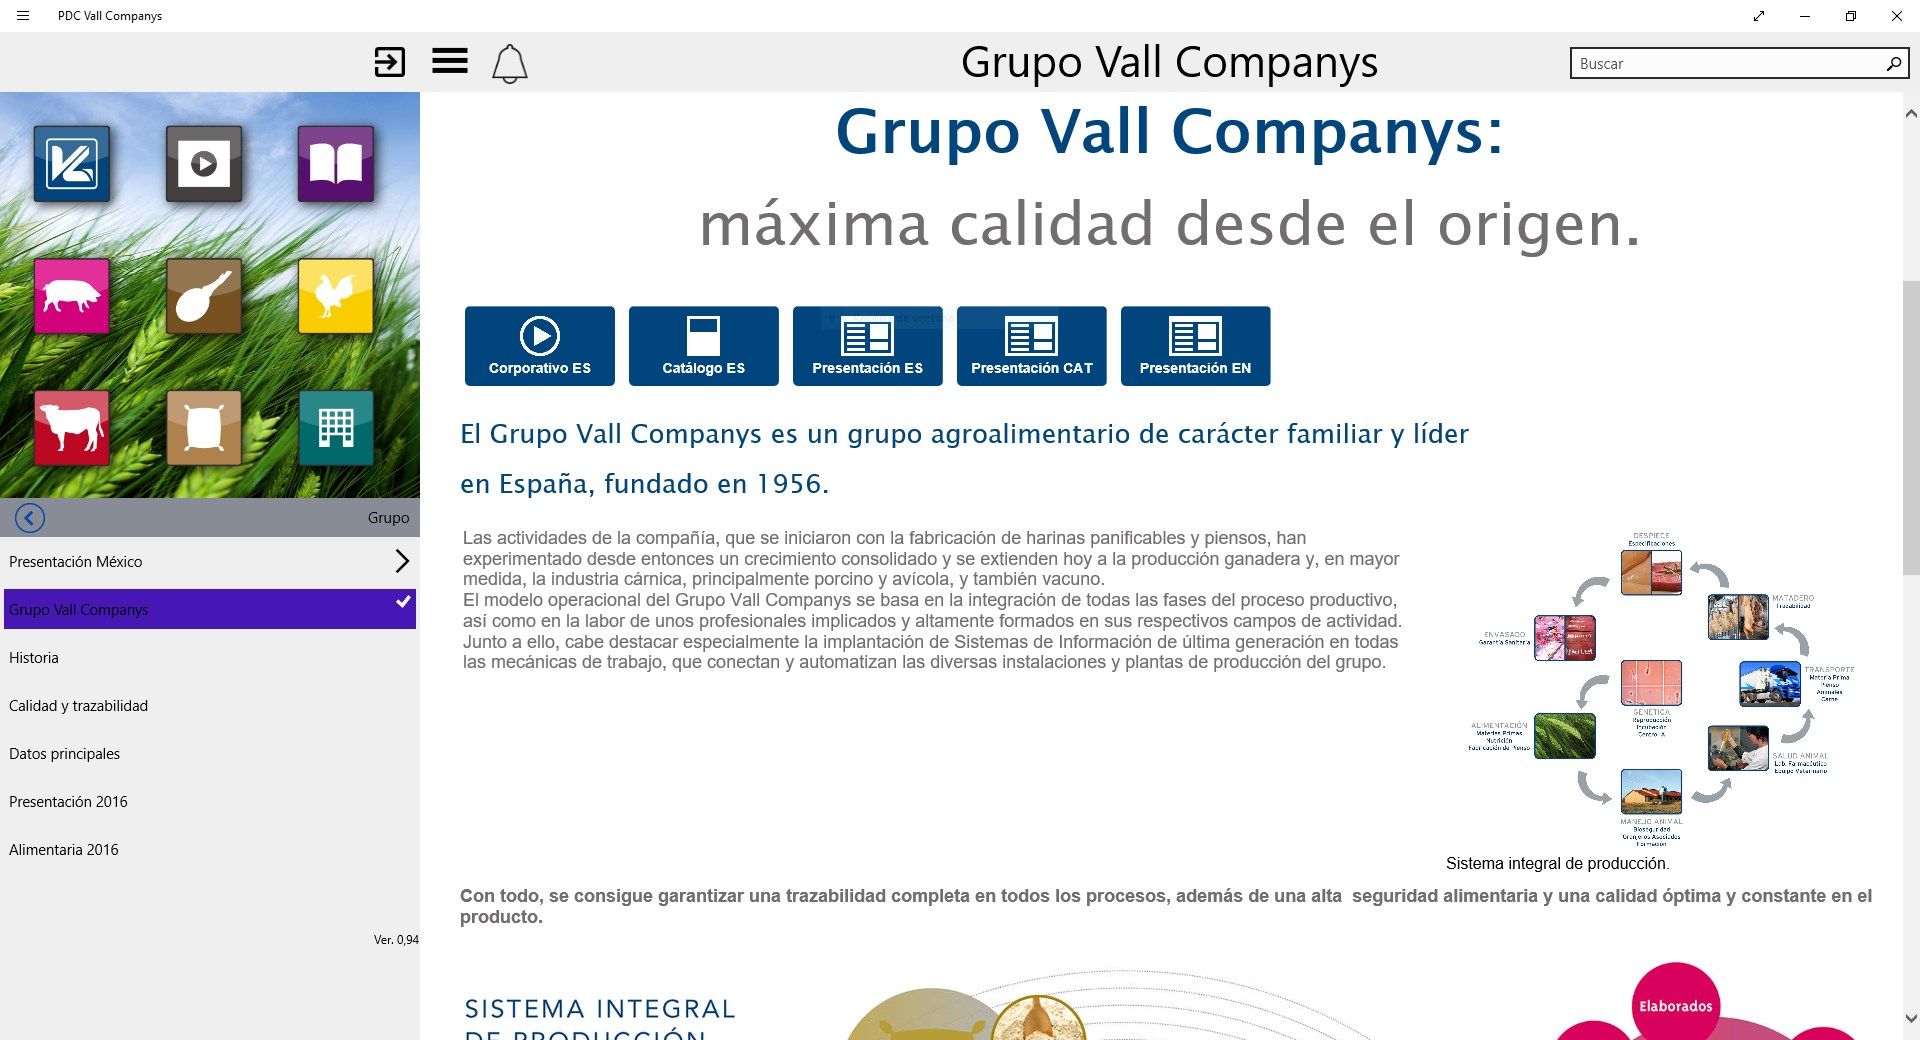 PDC Vall Companys